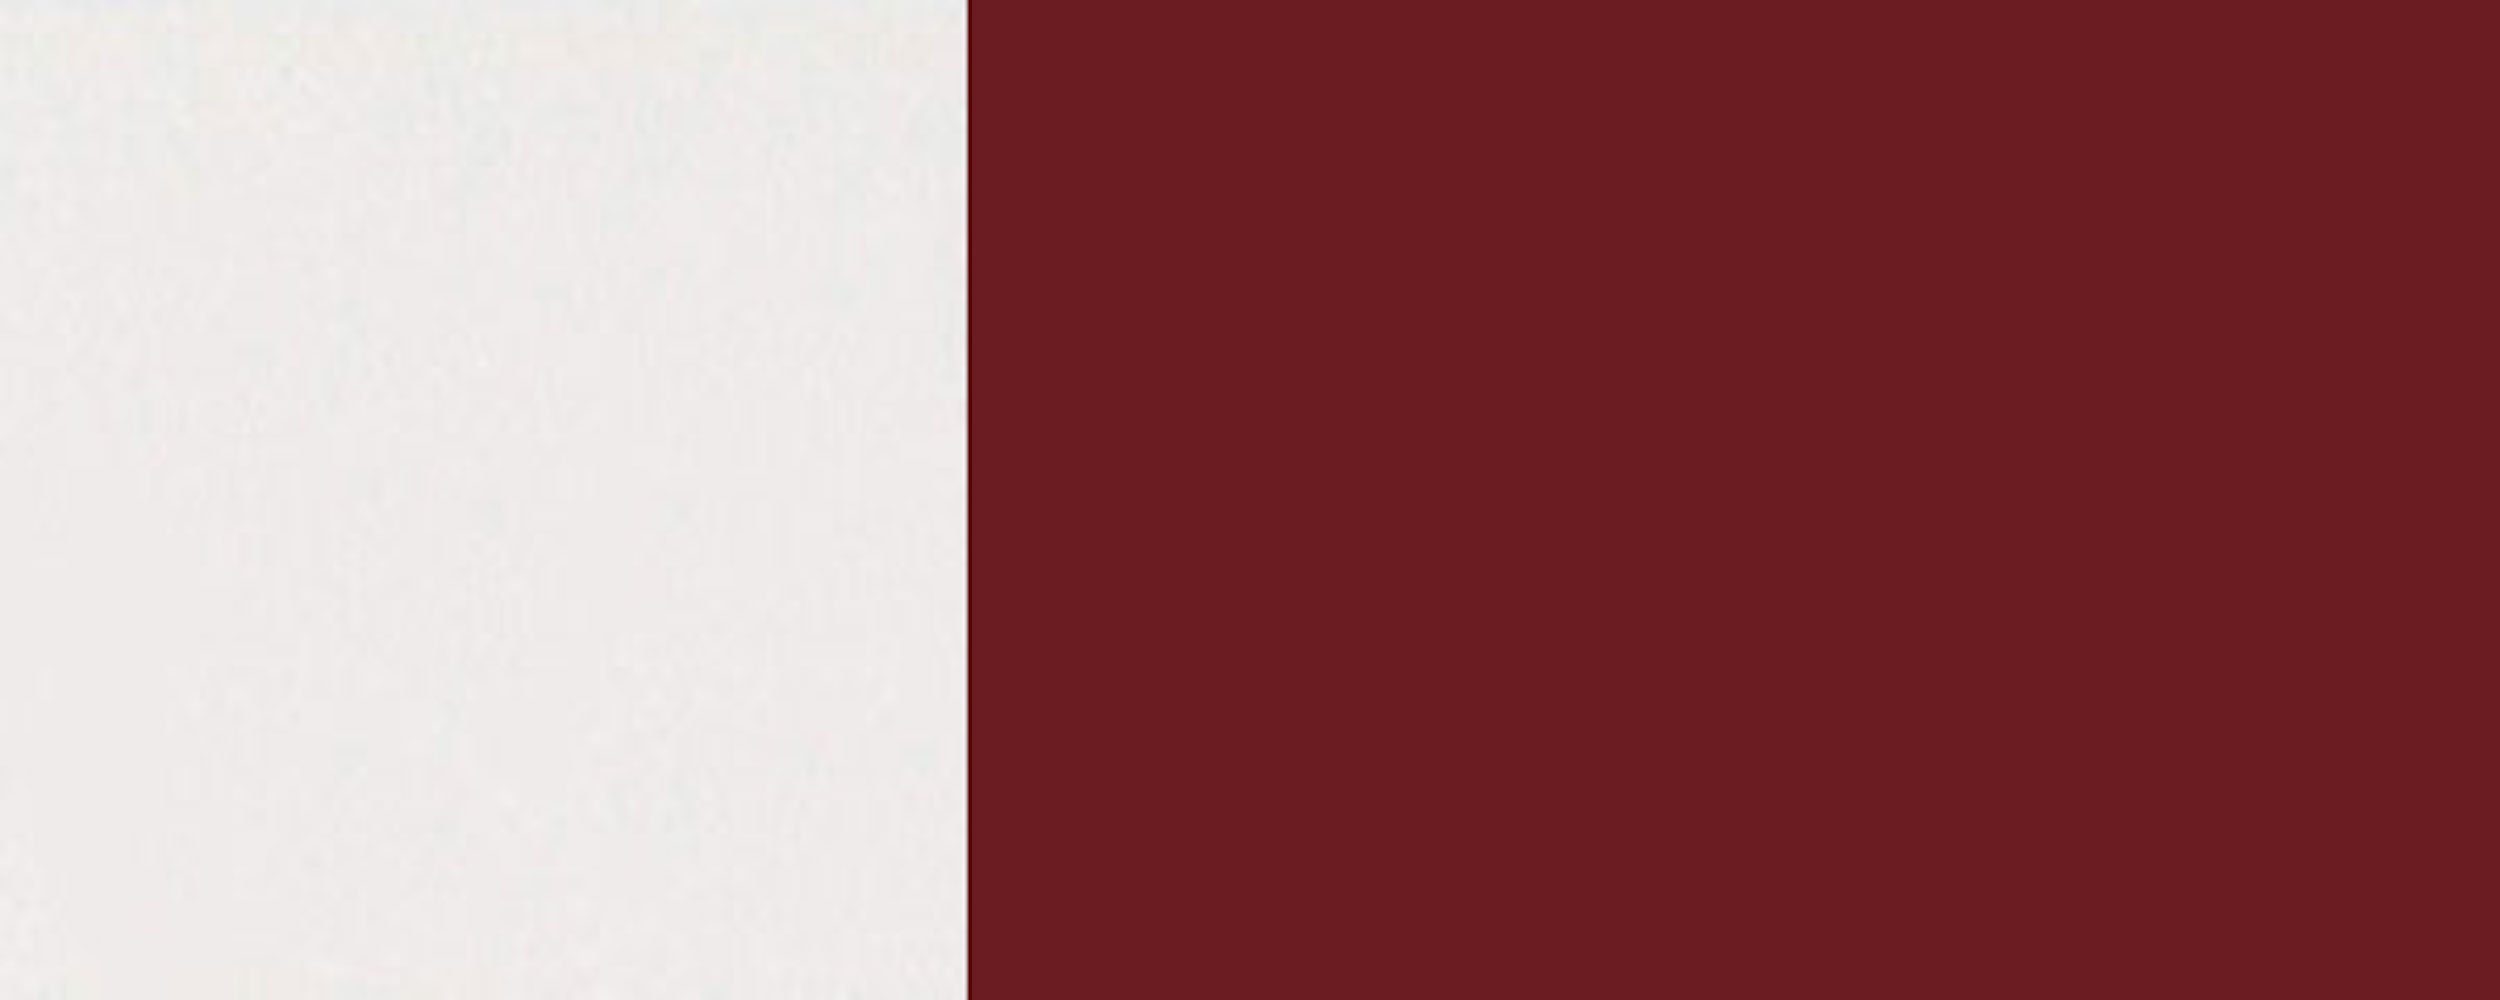 Spülenunterschrank & Schublade mit Korpusfarbe matt purpurrot Front- Rimini RAL 1 60cm Feldmann-Wohnen wählbar (Rimini) 3004 (Vollauszug)